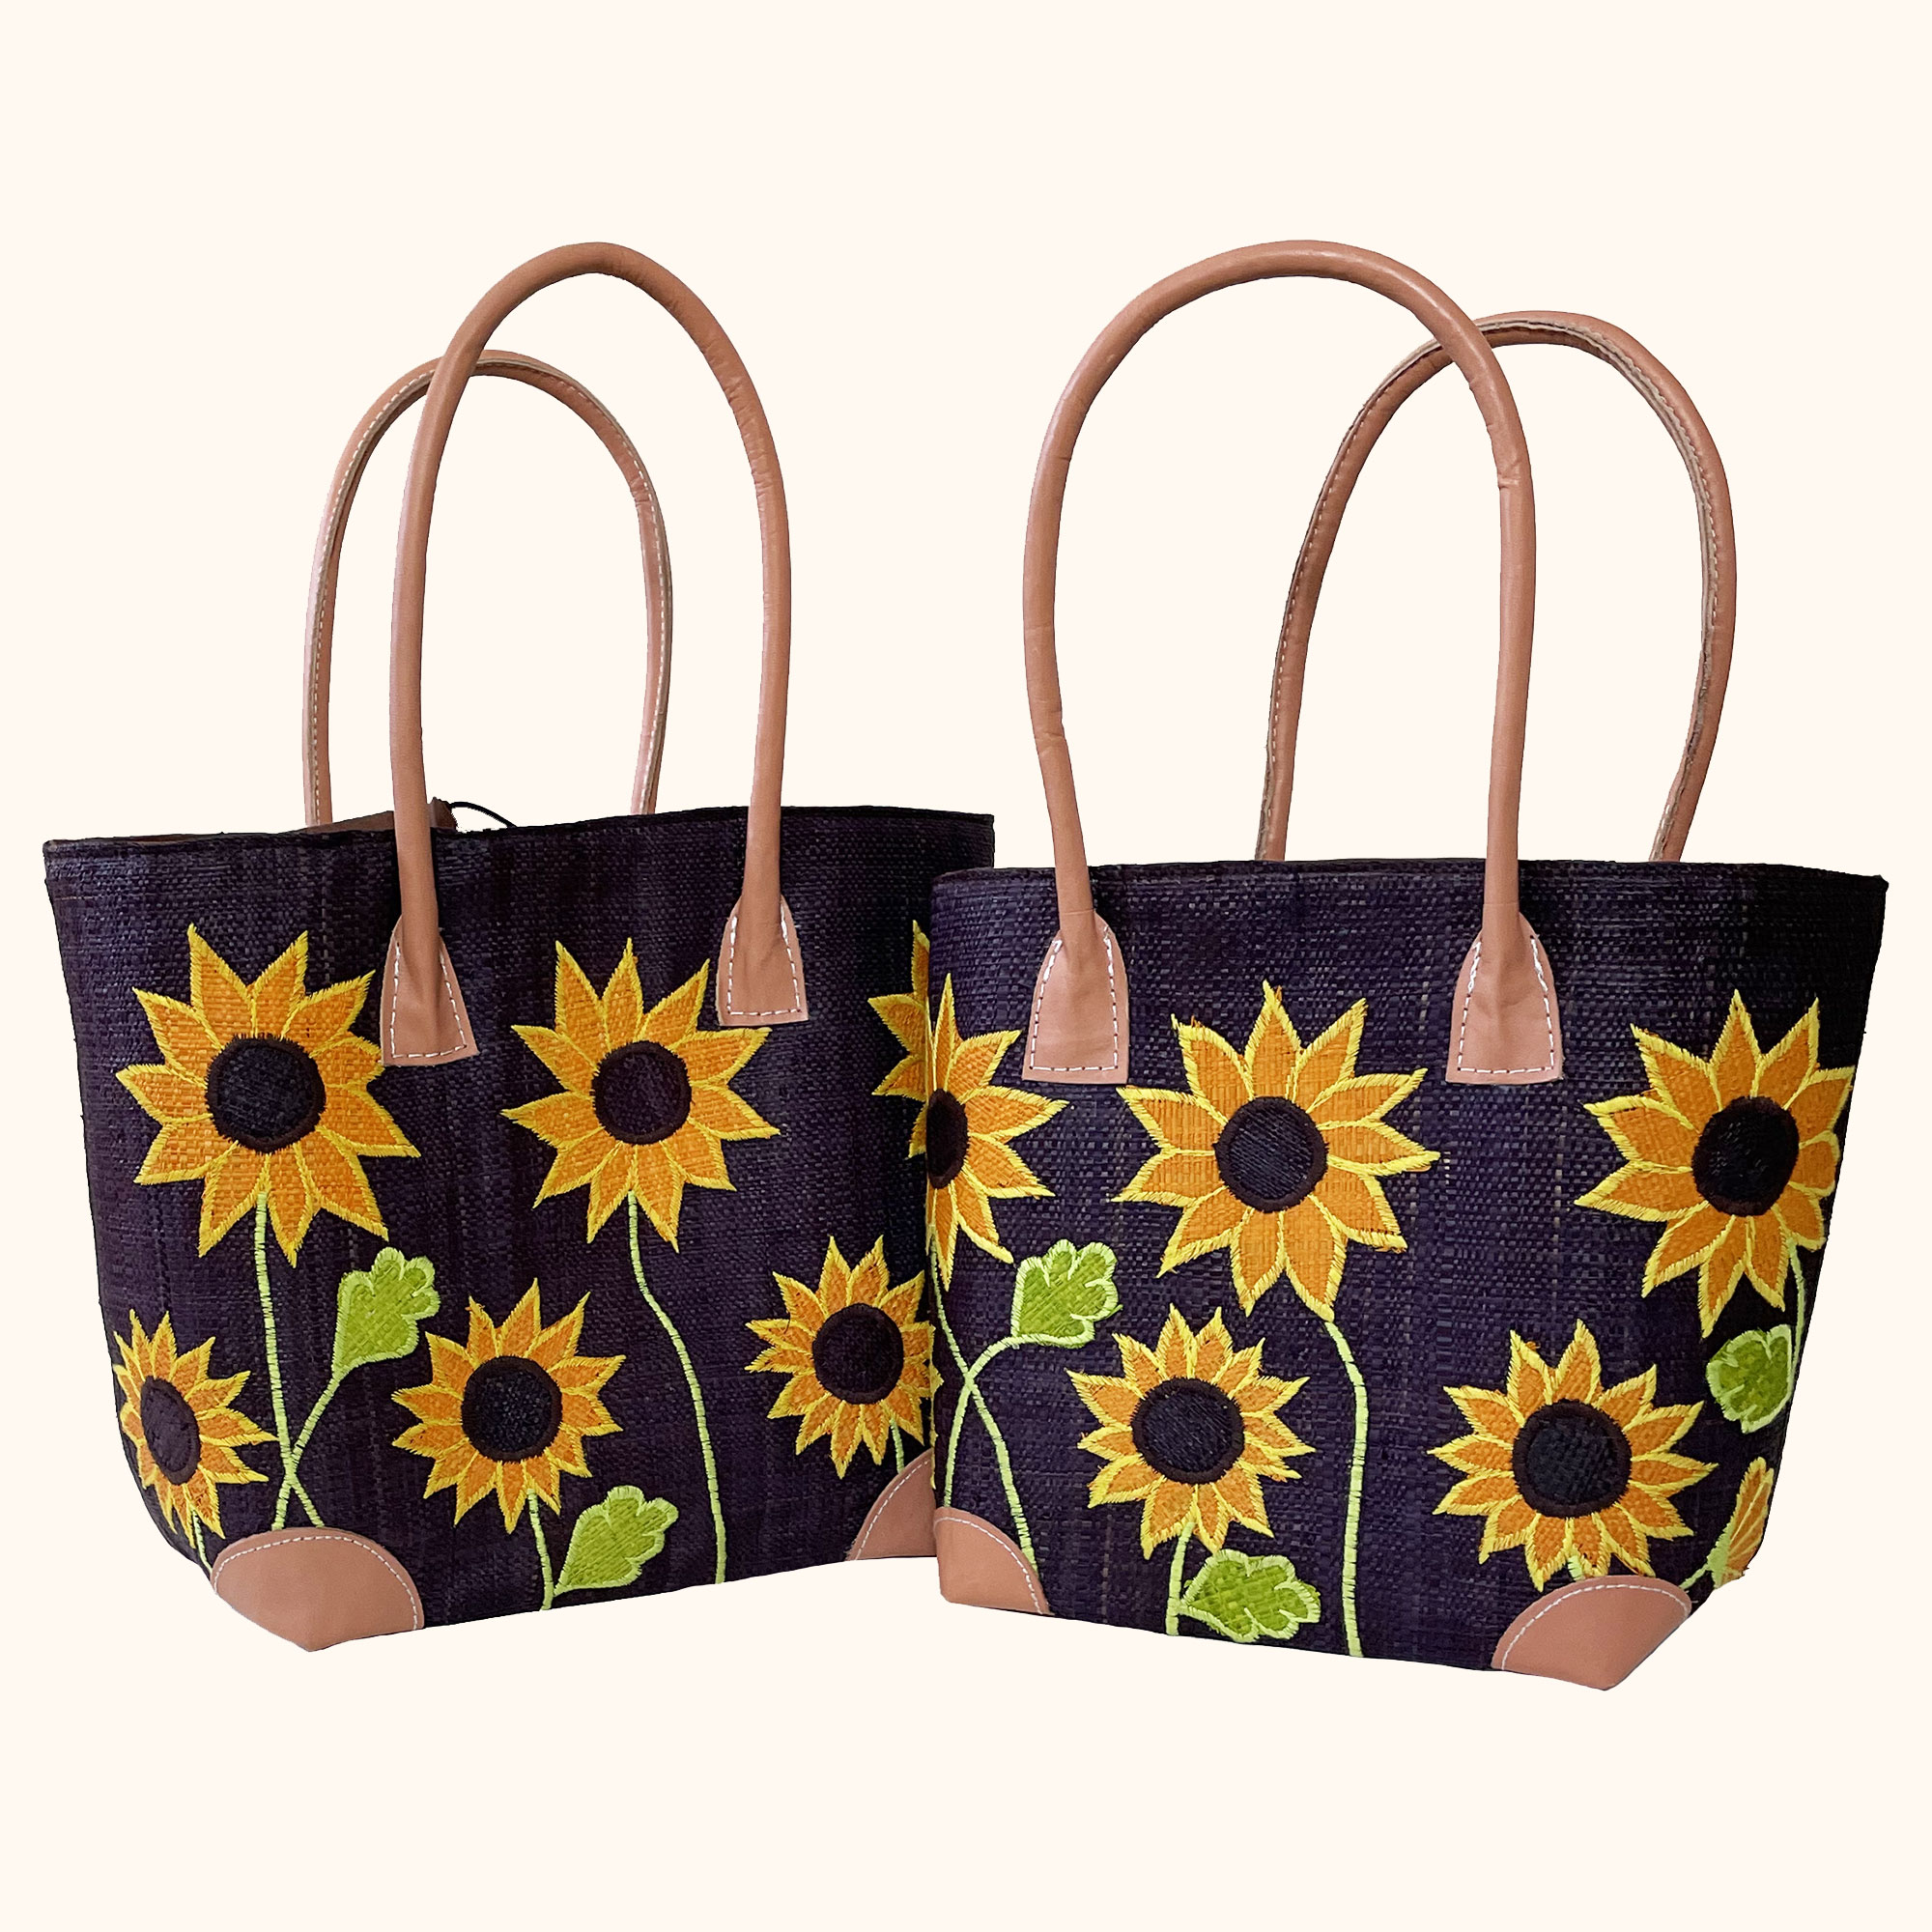 Ravelry: Small Sunflower Bag pattern by Diane Bertolatti